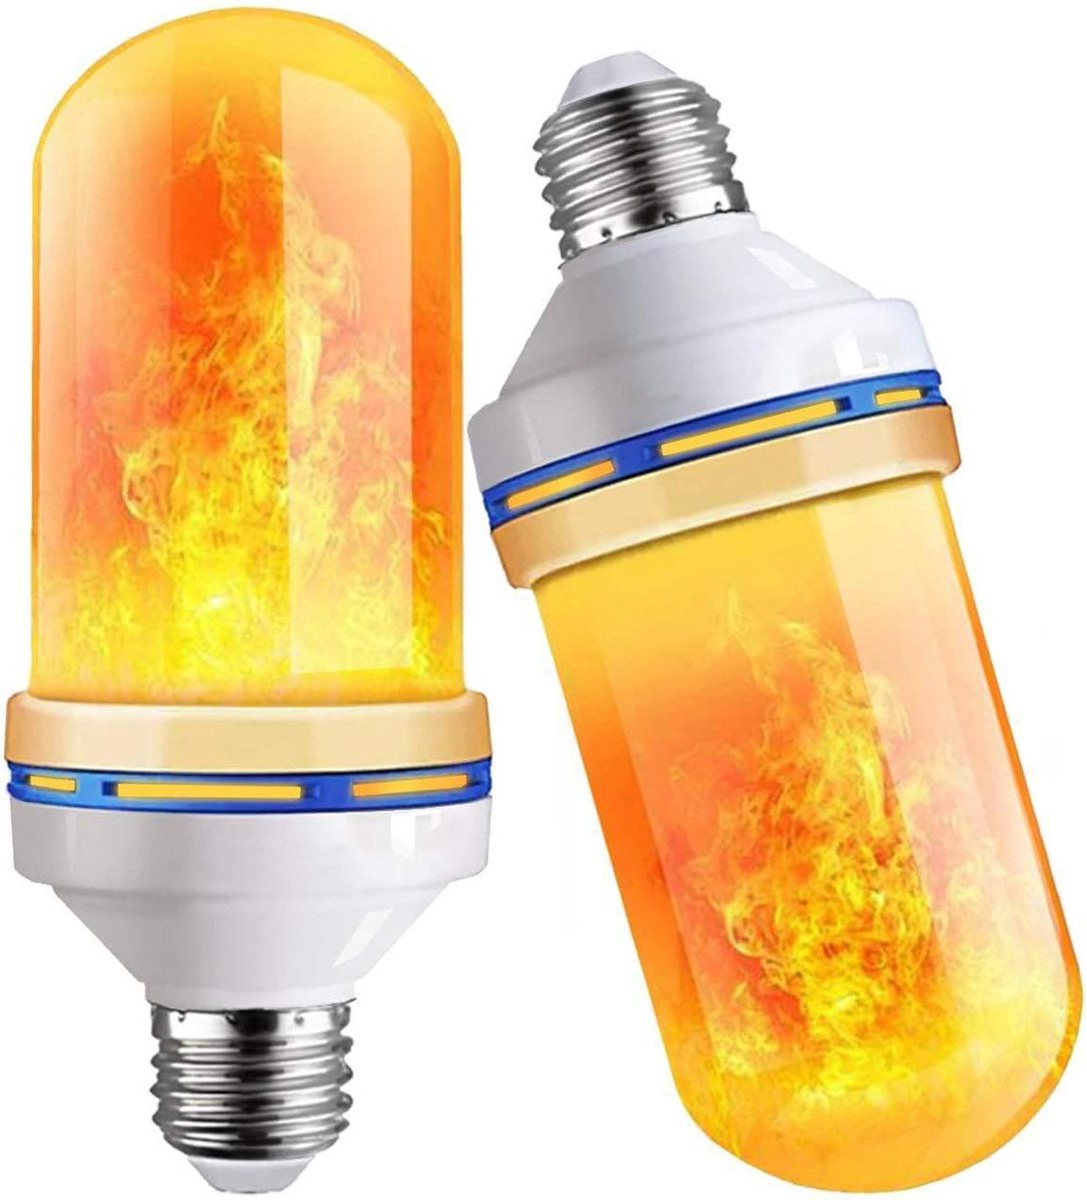 A&K Vlam Sfeer Lamp LED | 7 Watt | E27 Fitting | 108 LEDs | Zeer Realistisch | 4 in 1 Vlam, Standaard, Ademende en Gravity Modus